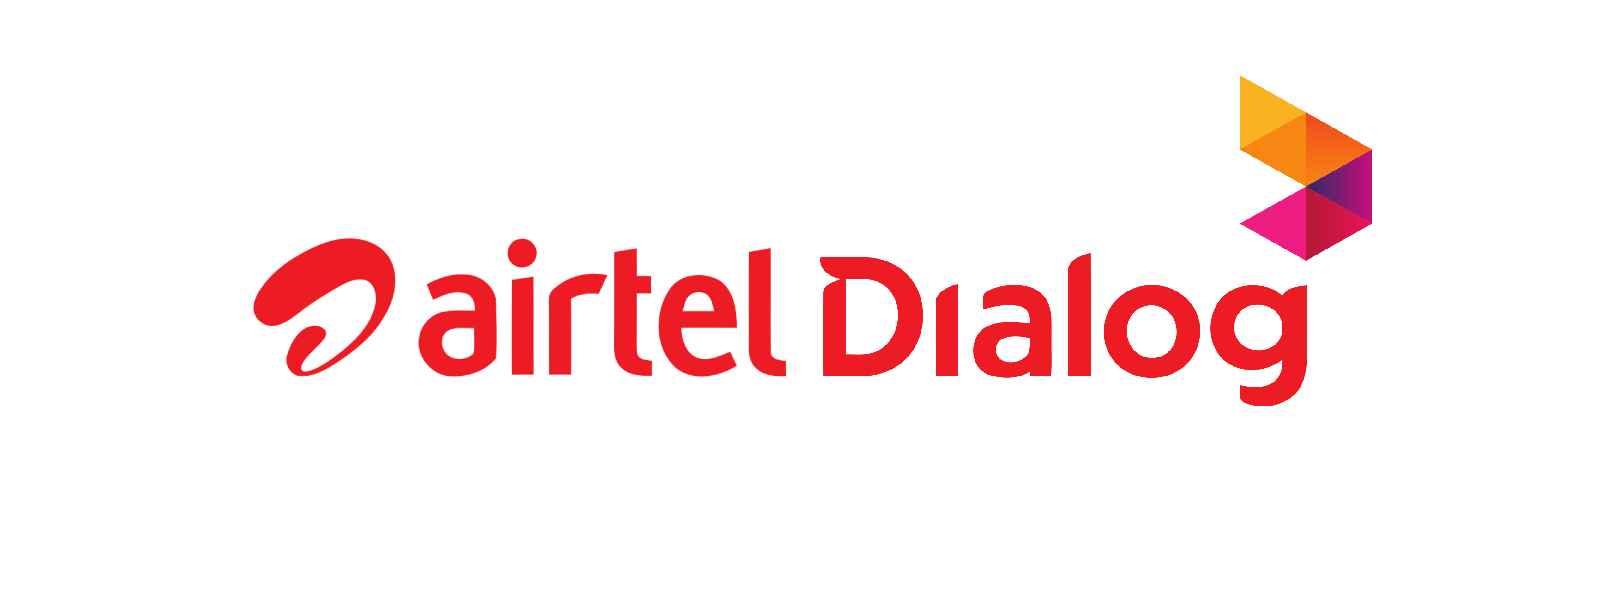 Dialog & Airtel announce merger